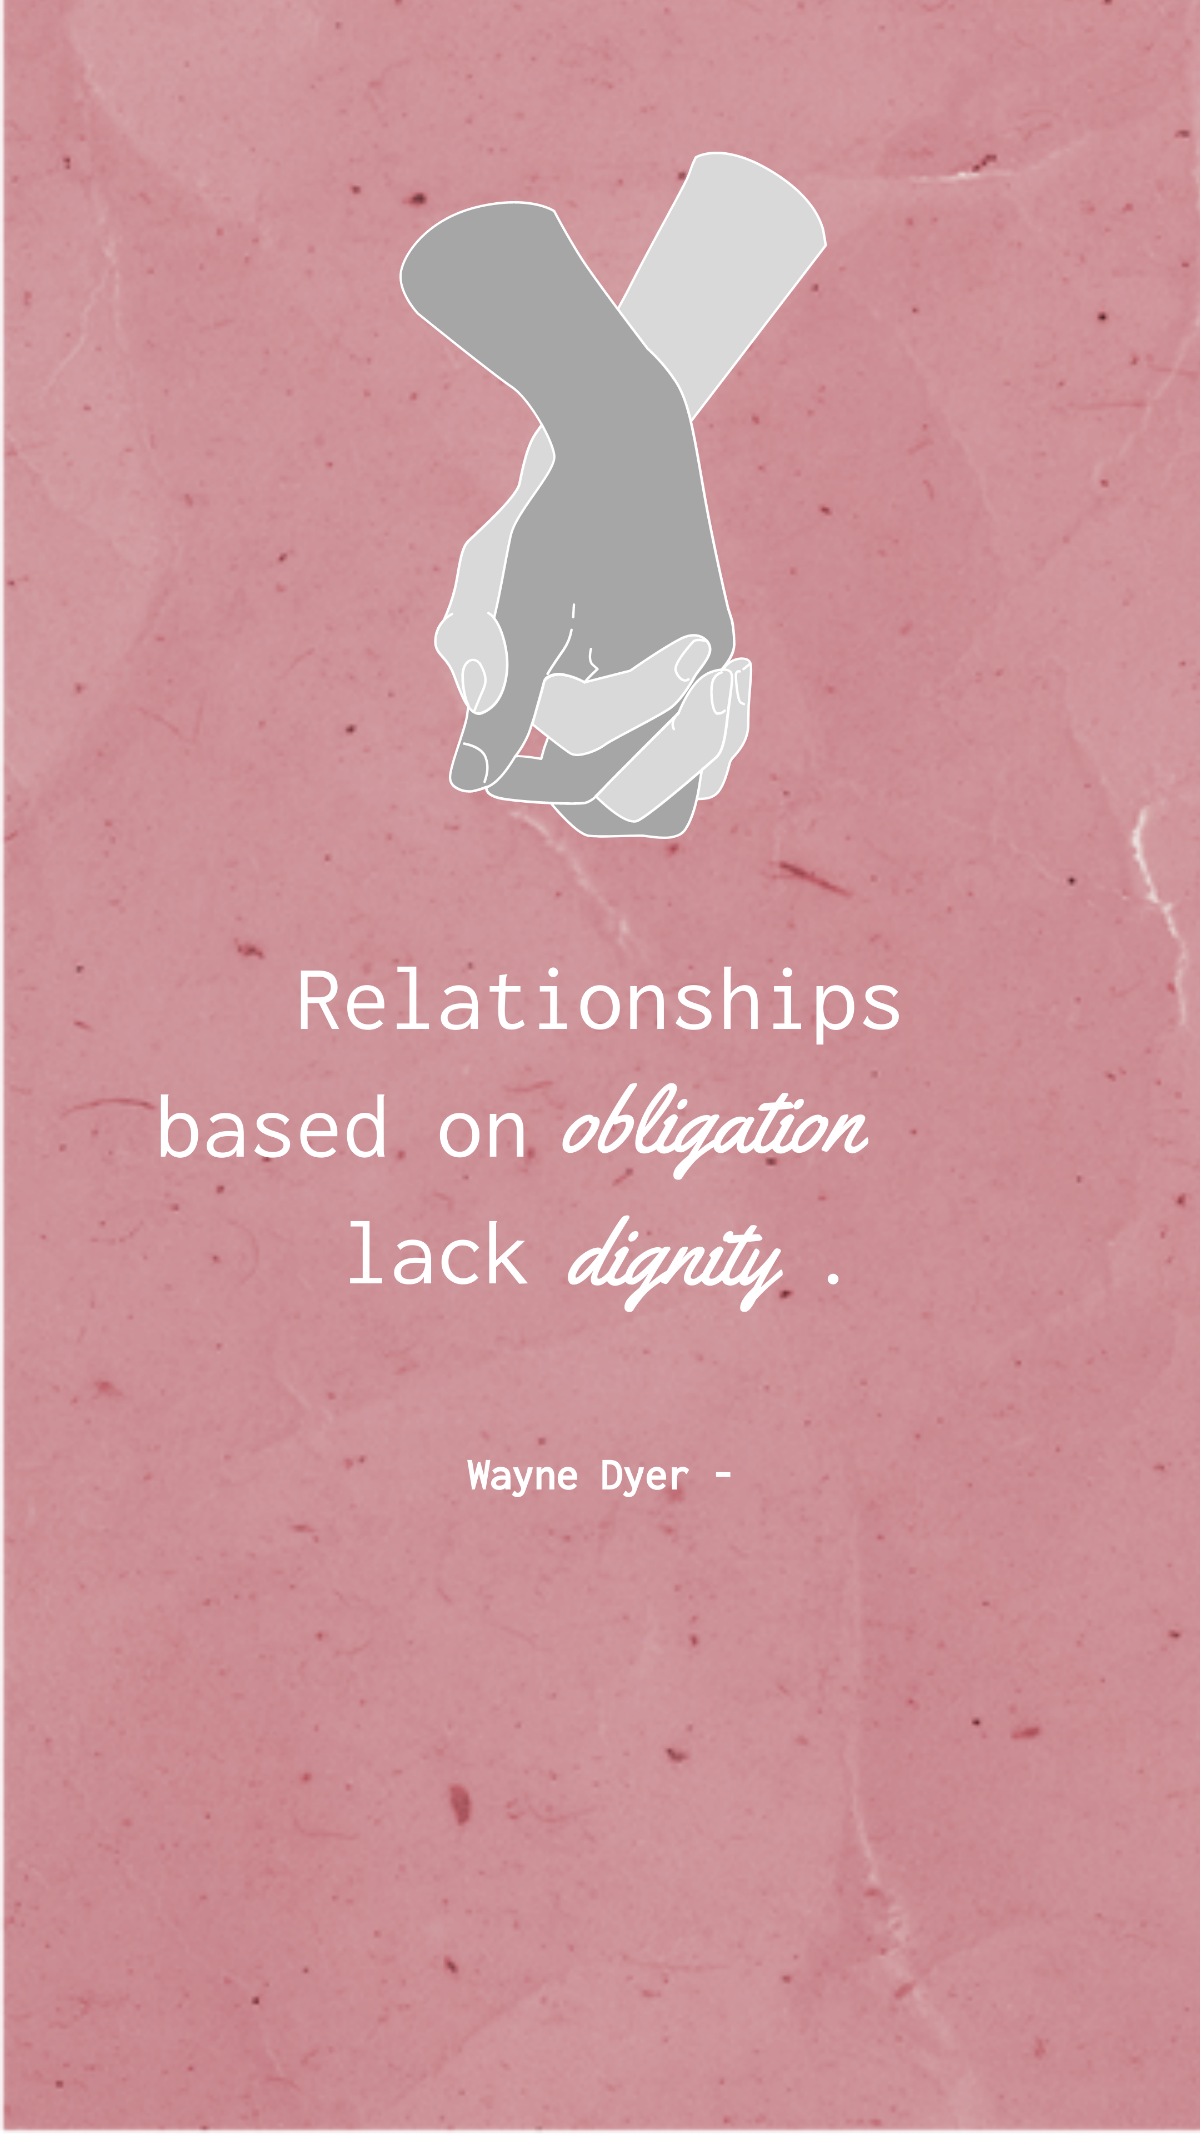 Wayne Dyer - Relationships based on obligation lack dignity. Template